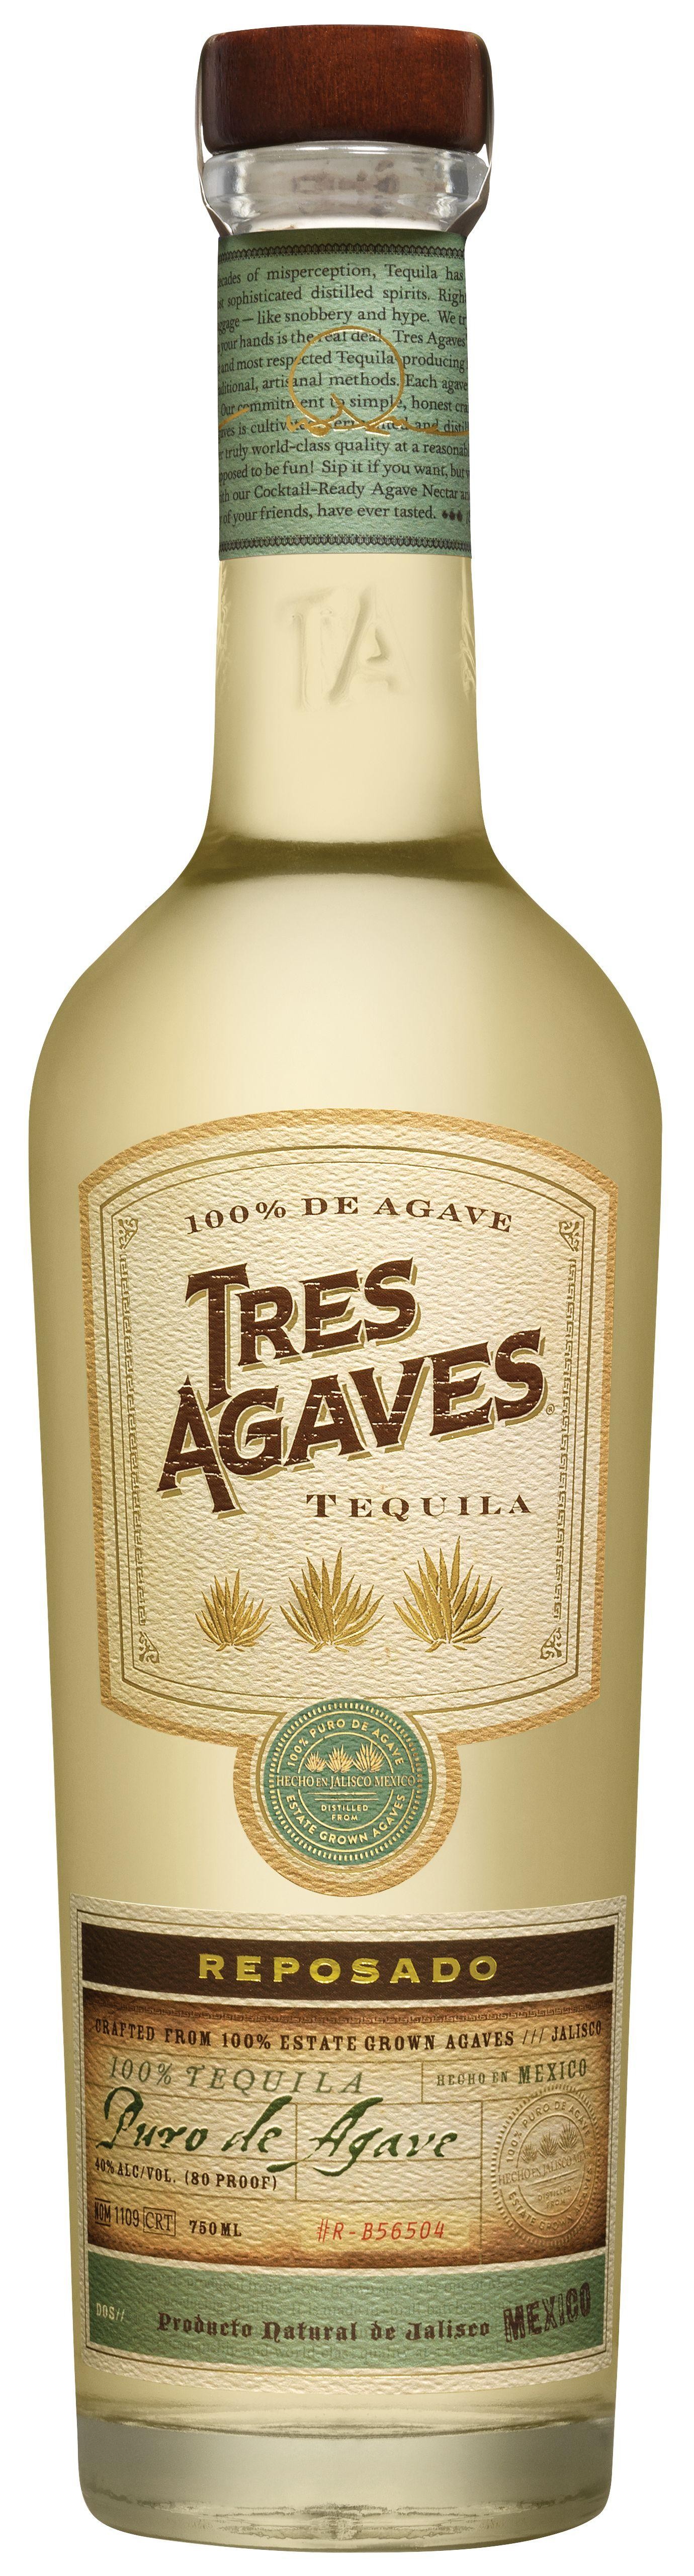 Tres Agaves Organic Reposado Tequila, 750mL Bottle Tequila - 750ml Bottle